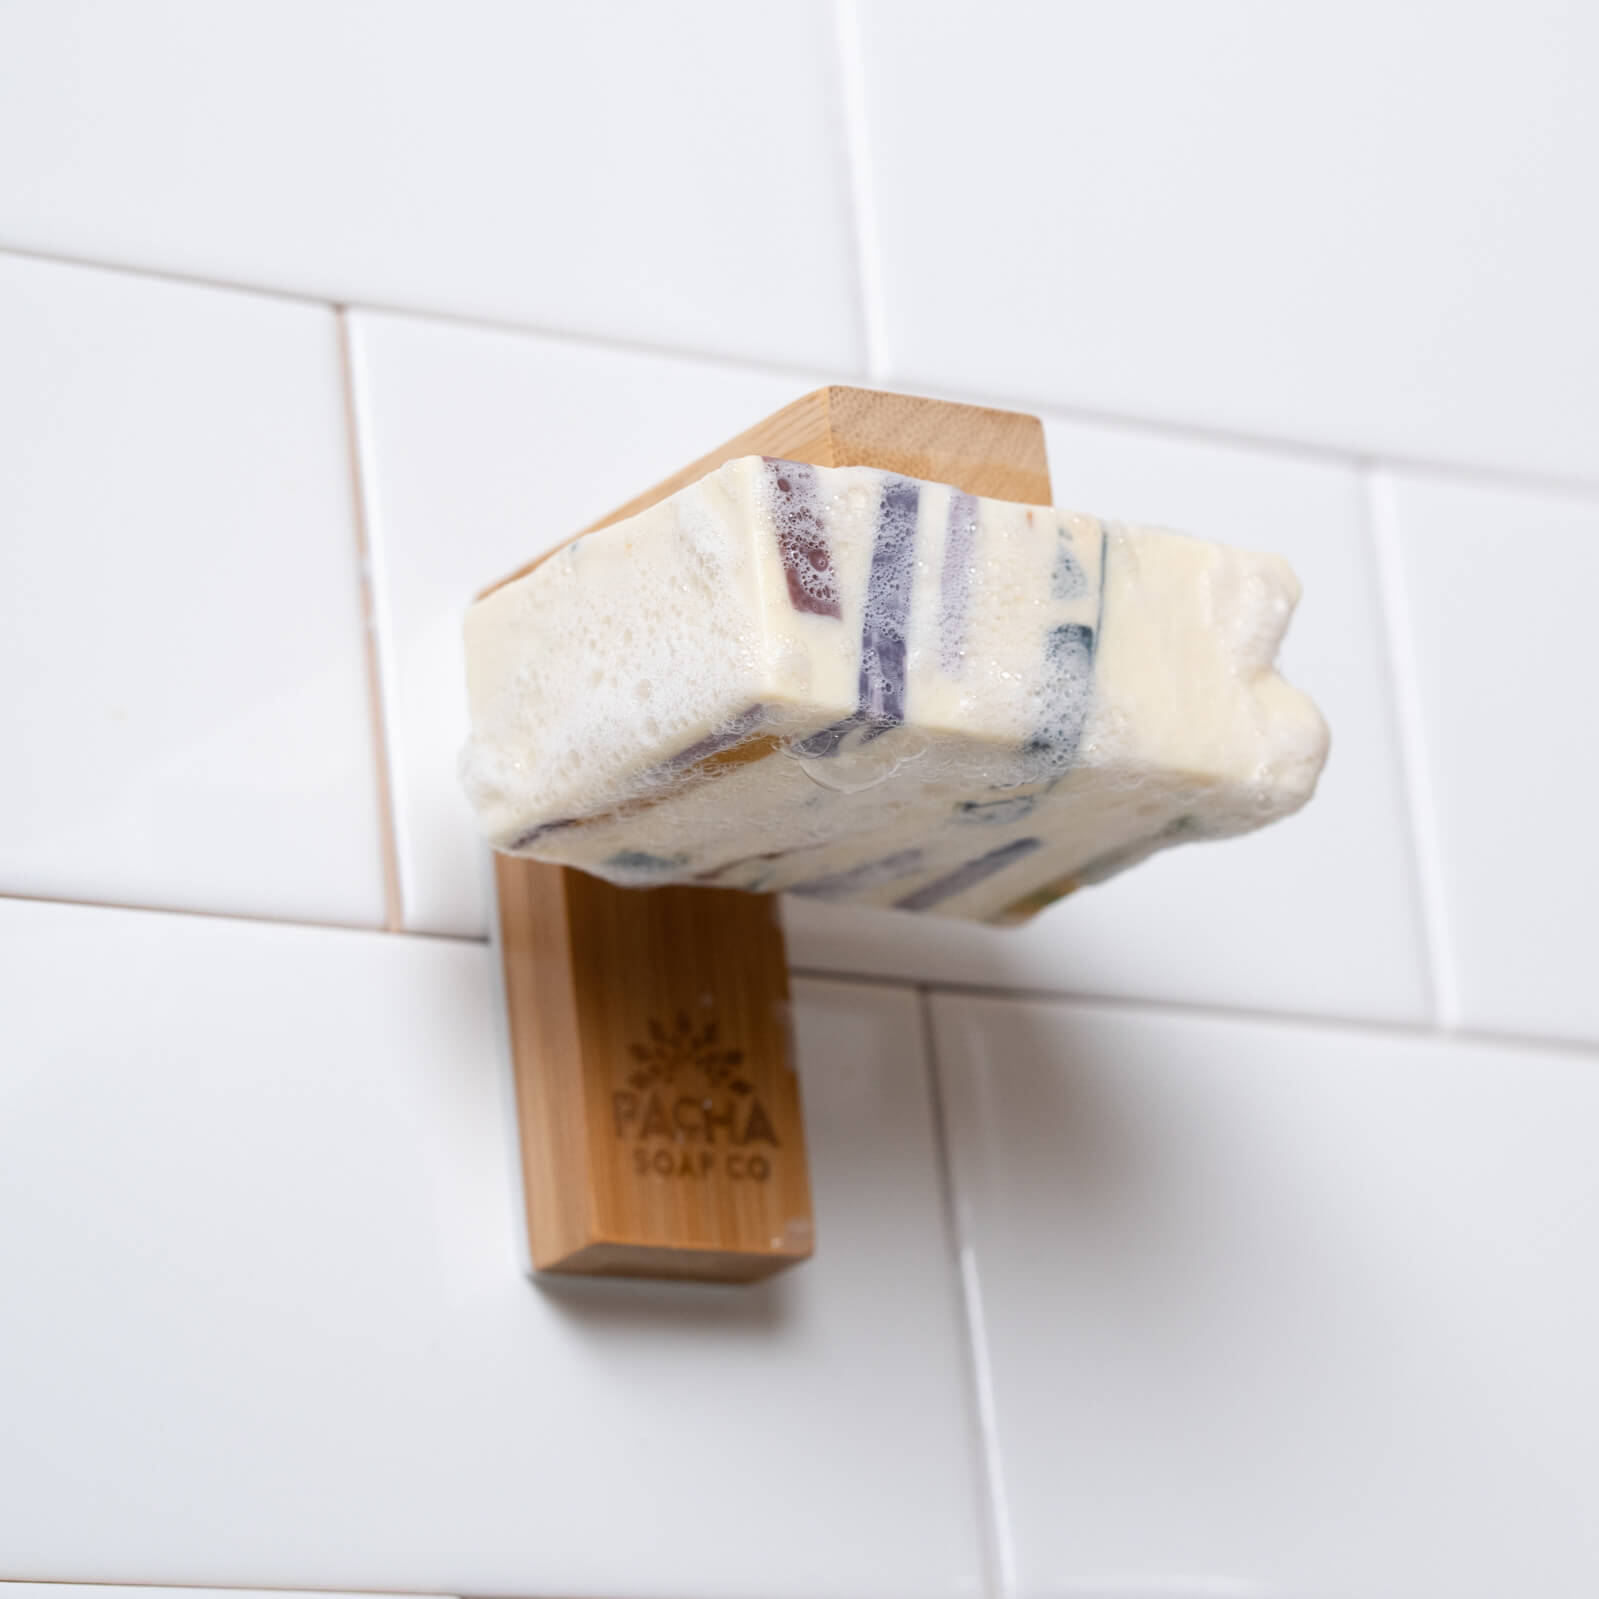 Wooden Soap Holder, Self-adhesive Magnetic Wood Bar Soap Dish